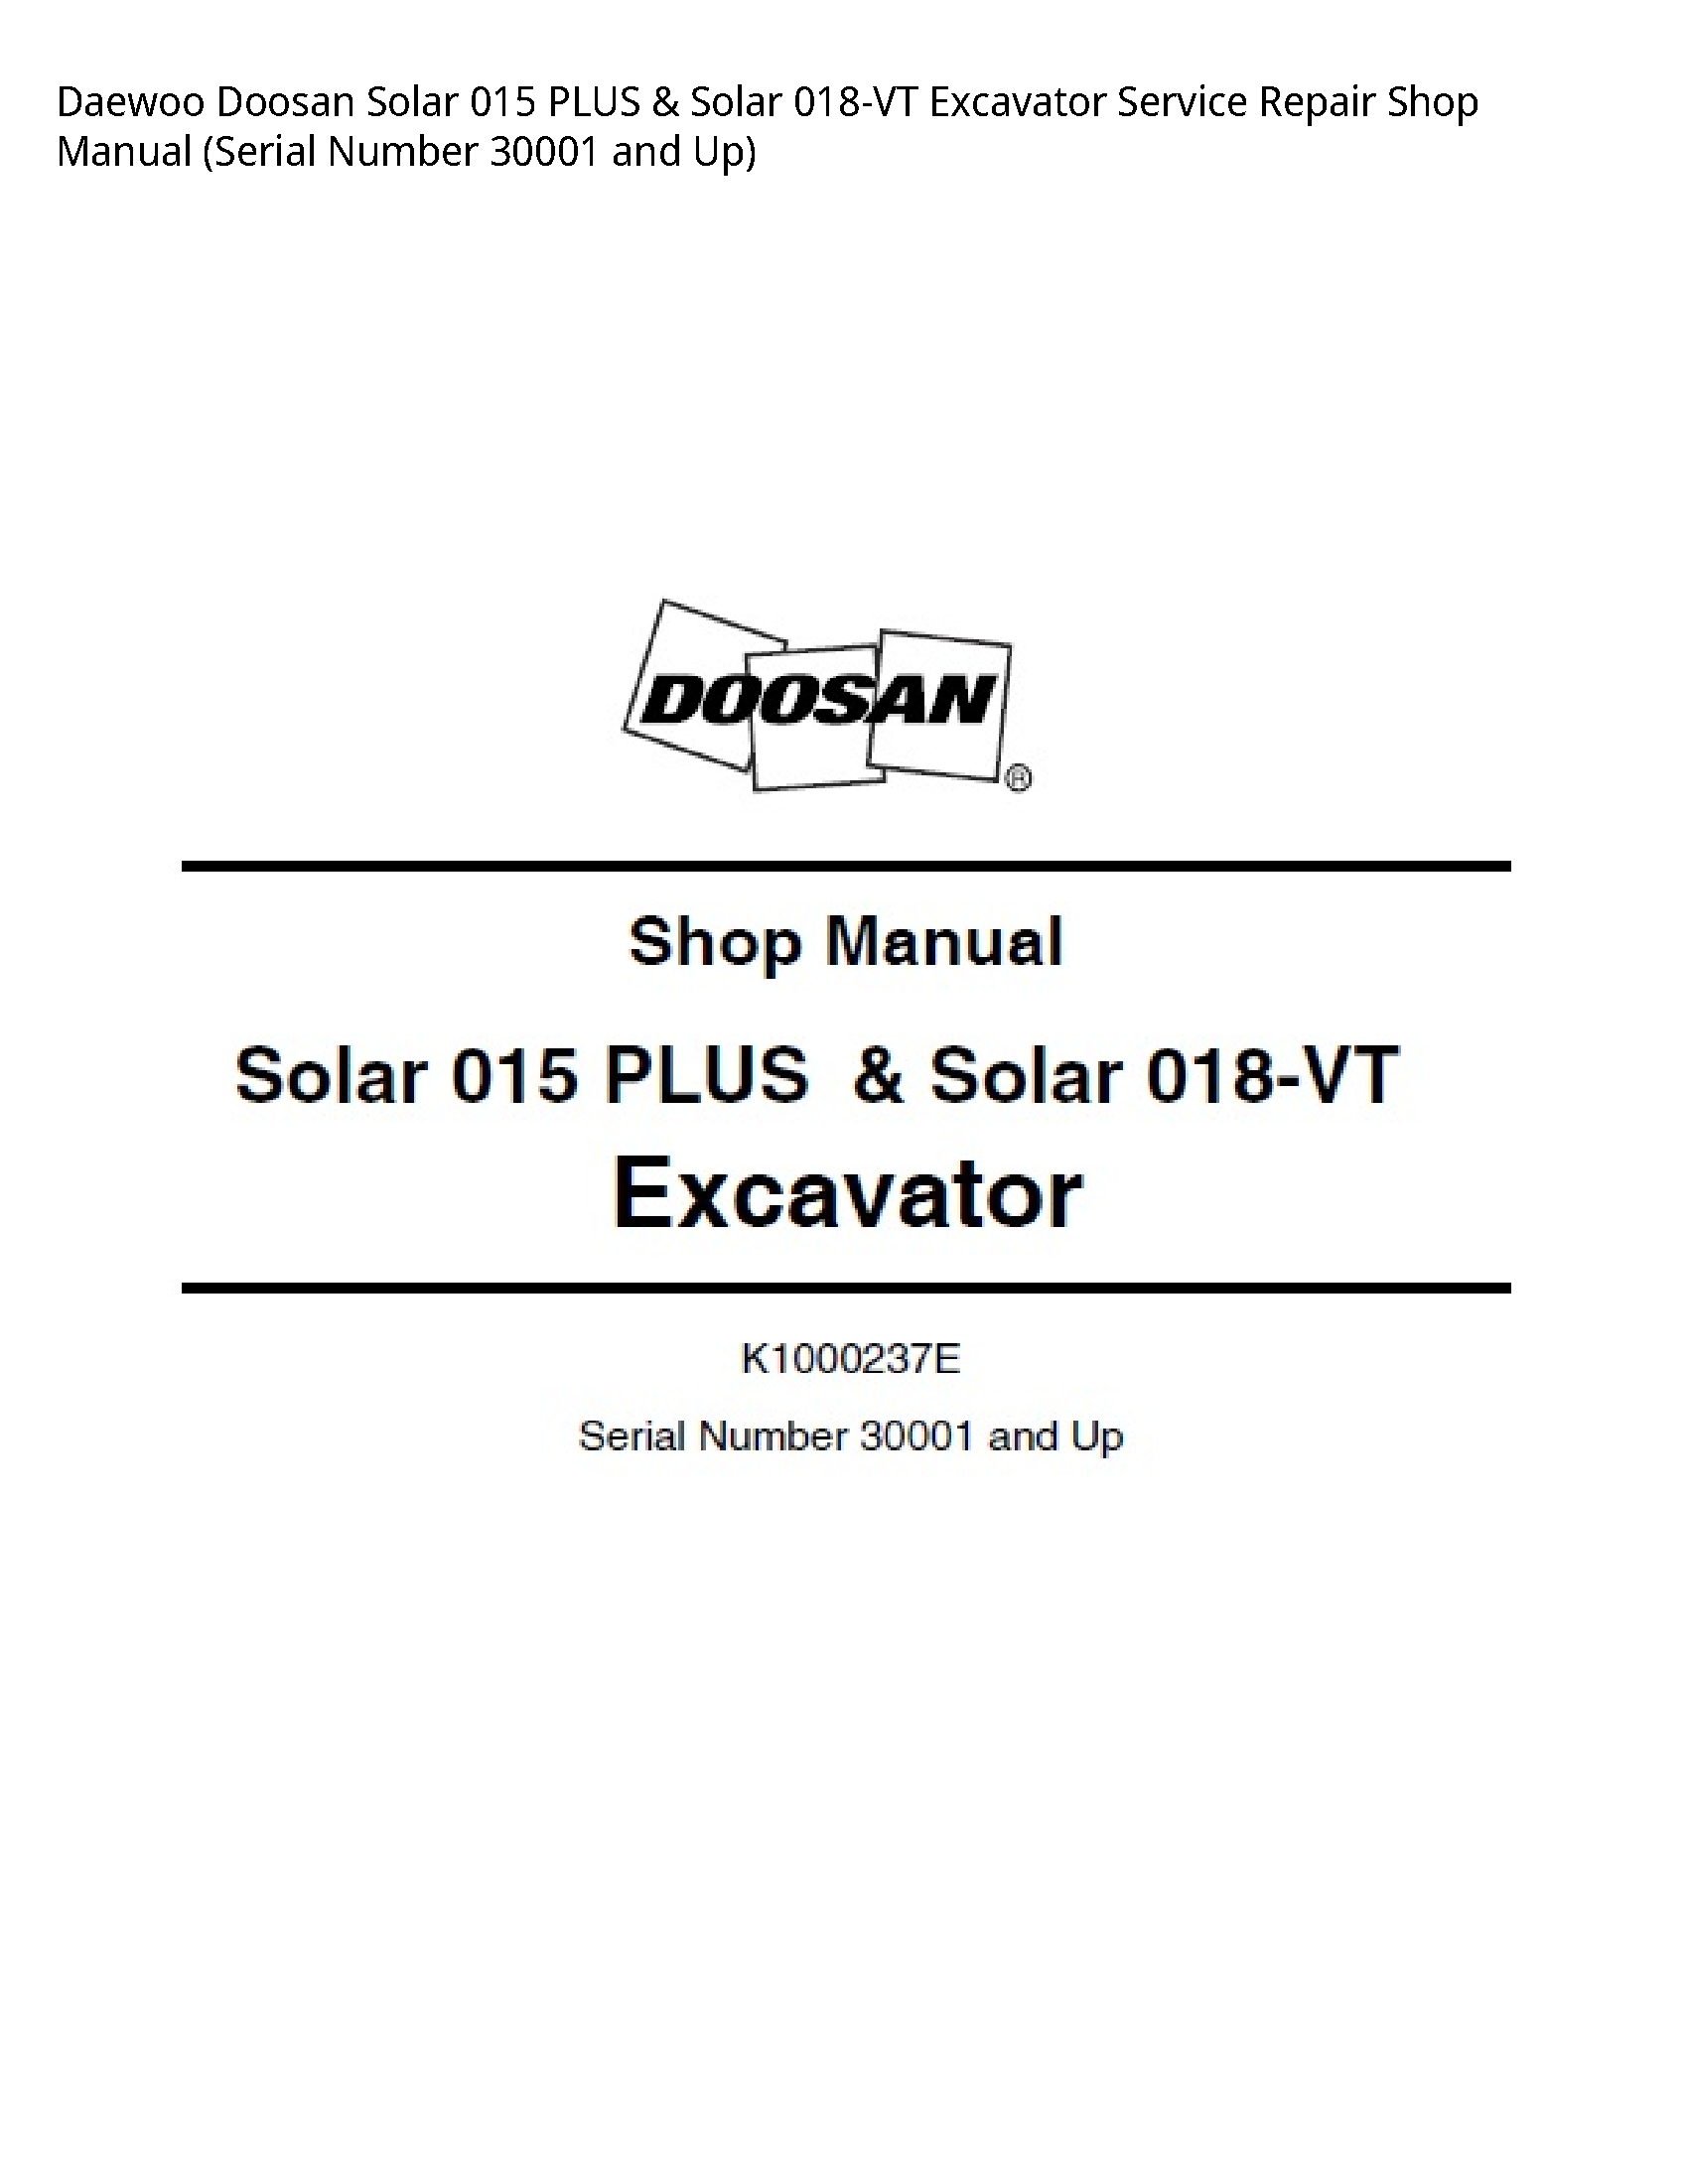 Daewoo Doosan 015 Solar PLUS Solar Excavator manual